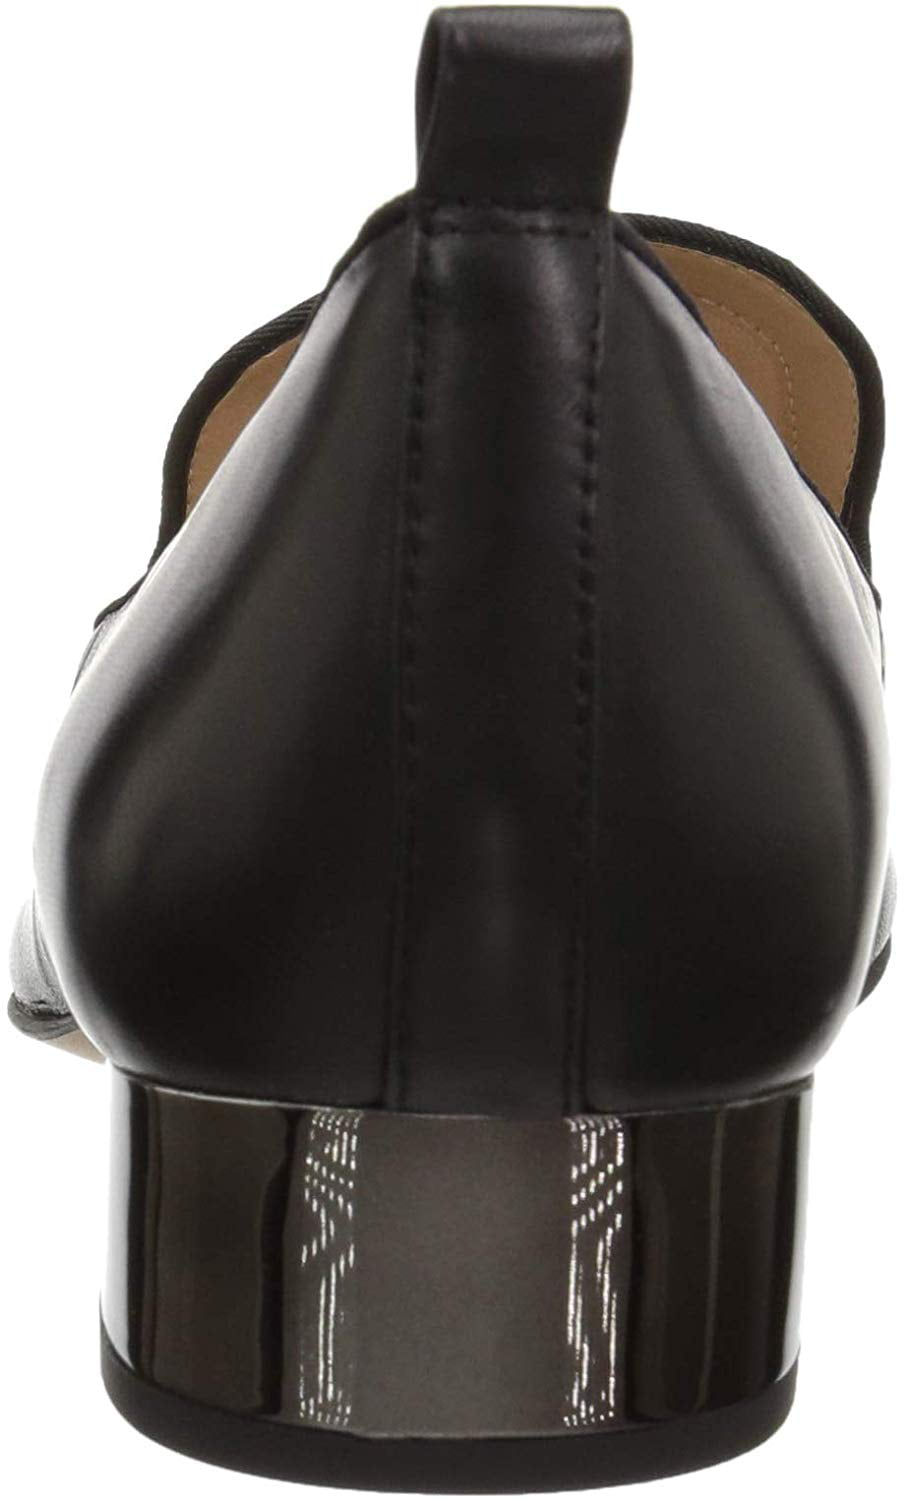 Loafers 8.5 Medium  新規出品Franco Womens Vianna  B M  Black Leather Heel  超ポイント祭?期間限定 Franco Sarto  フランコサルト シューズ ローファー